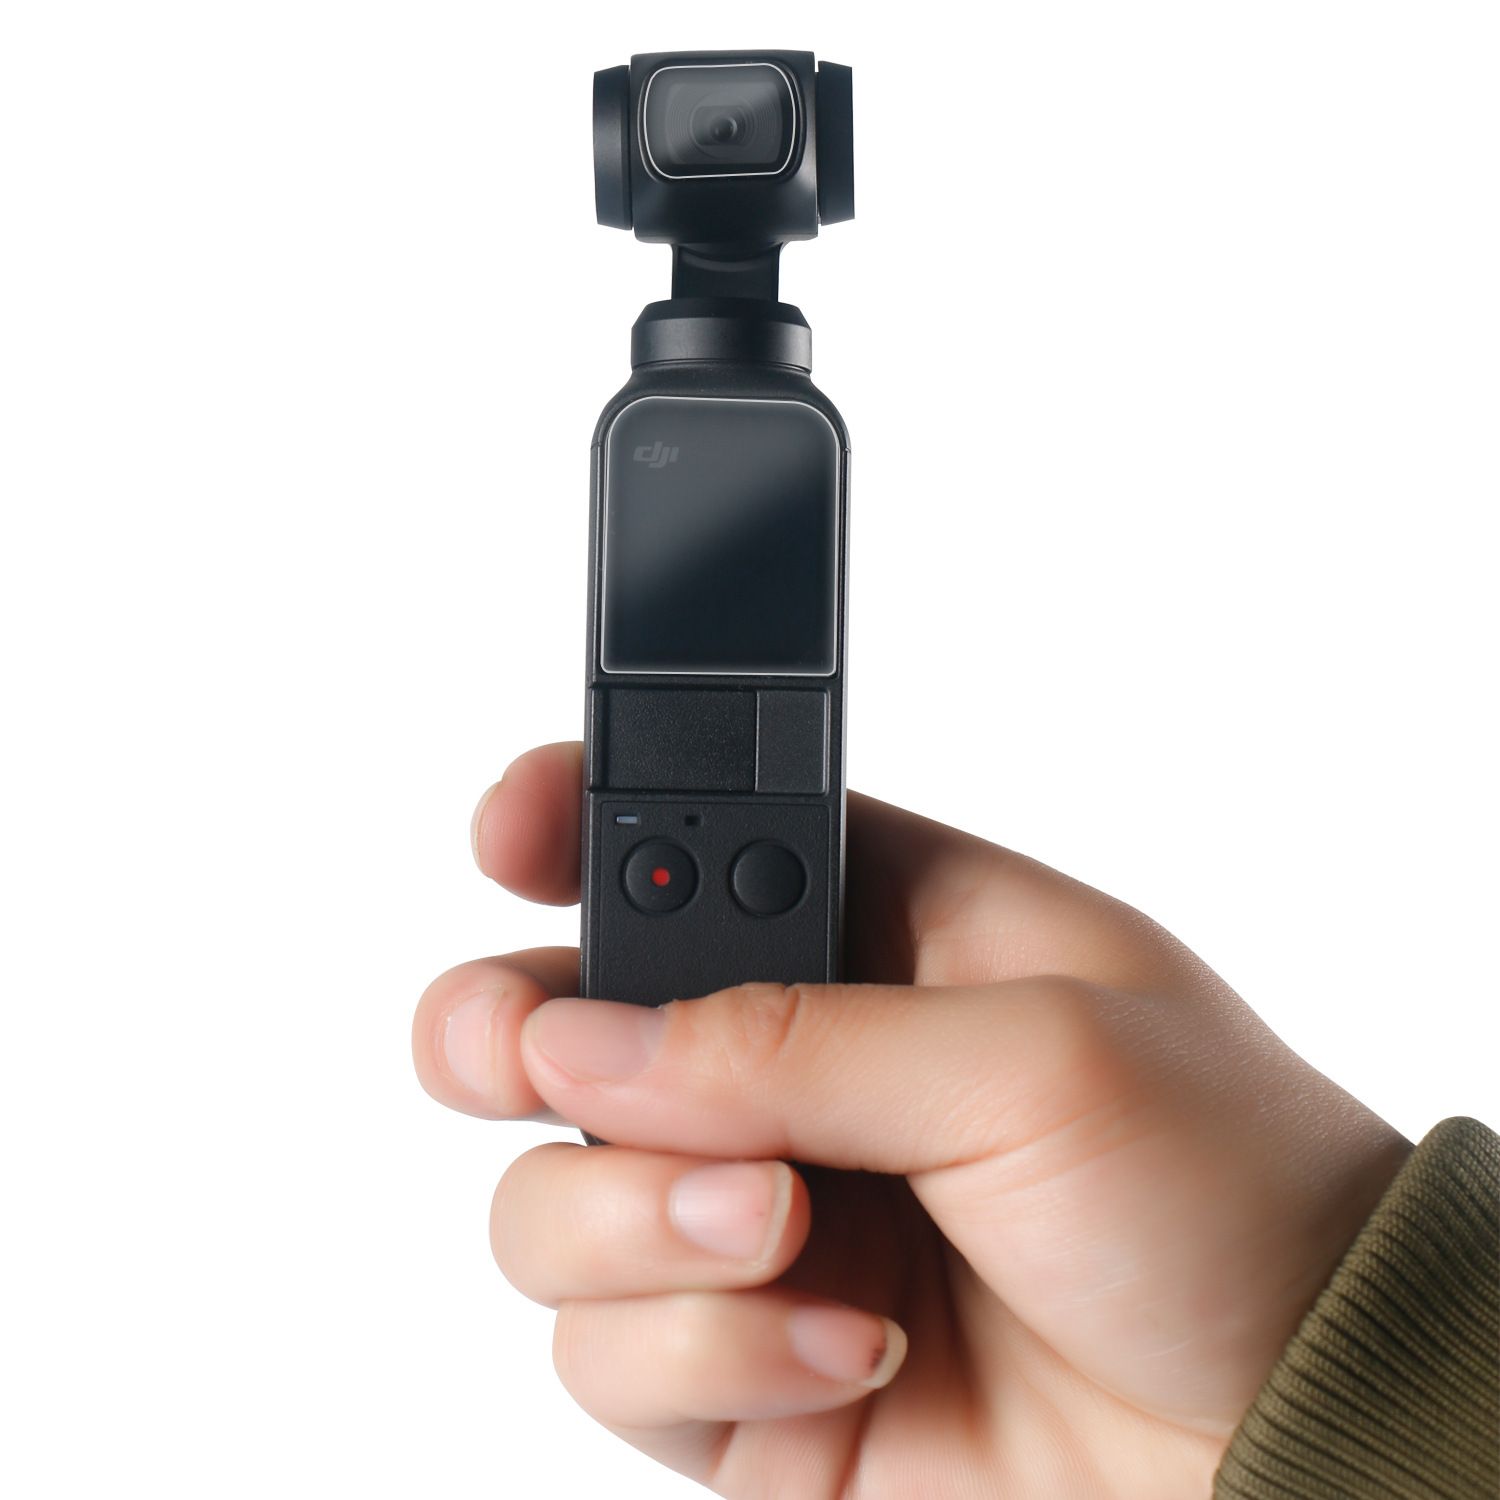 SheIngKa-Lens-Screen-Protective-Protector-Film-for-DJI-OSMO-Pocket-Action-Gimbal-Camera-1531897